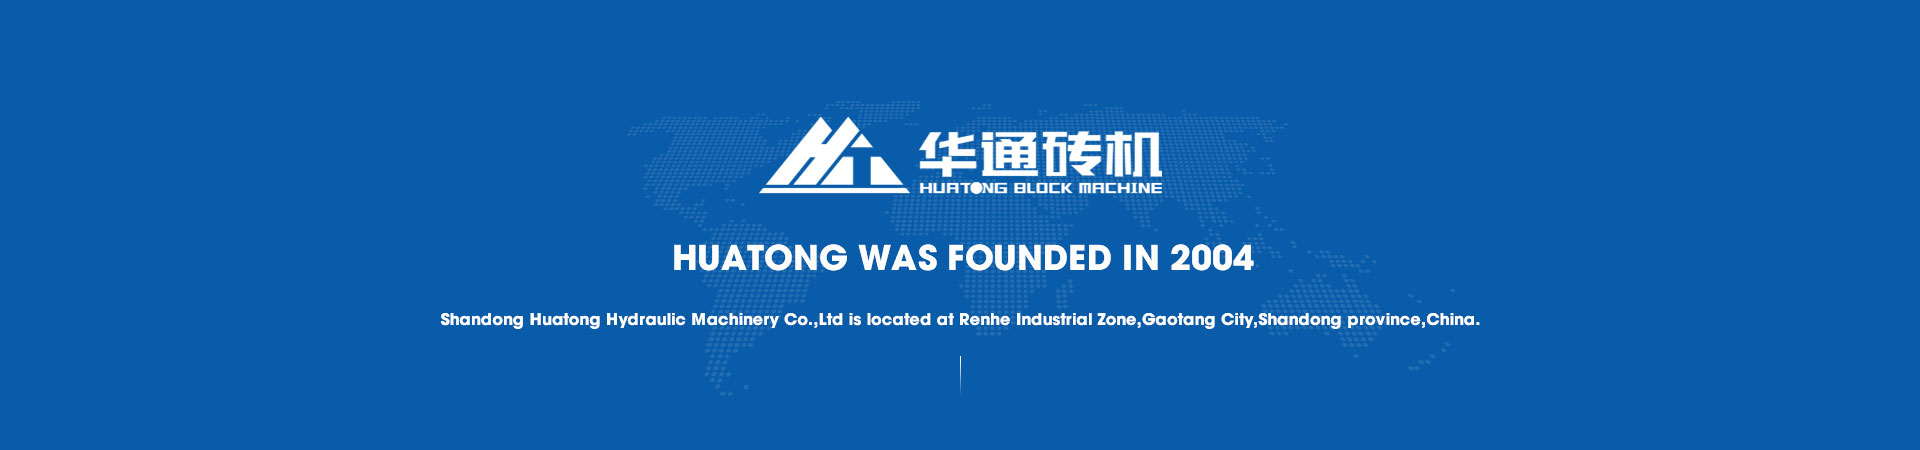 Shandong Huatong Hydraulic Pressure Machinery Co.Ltd